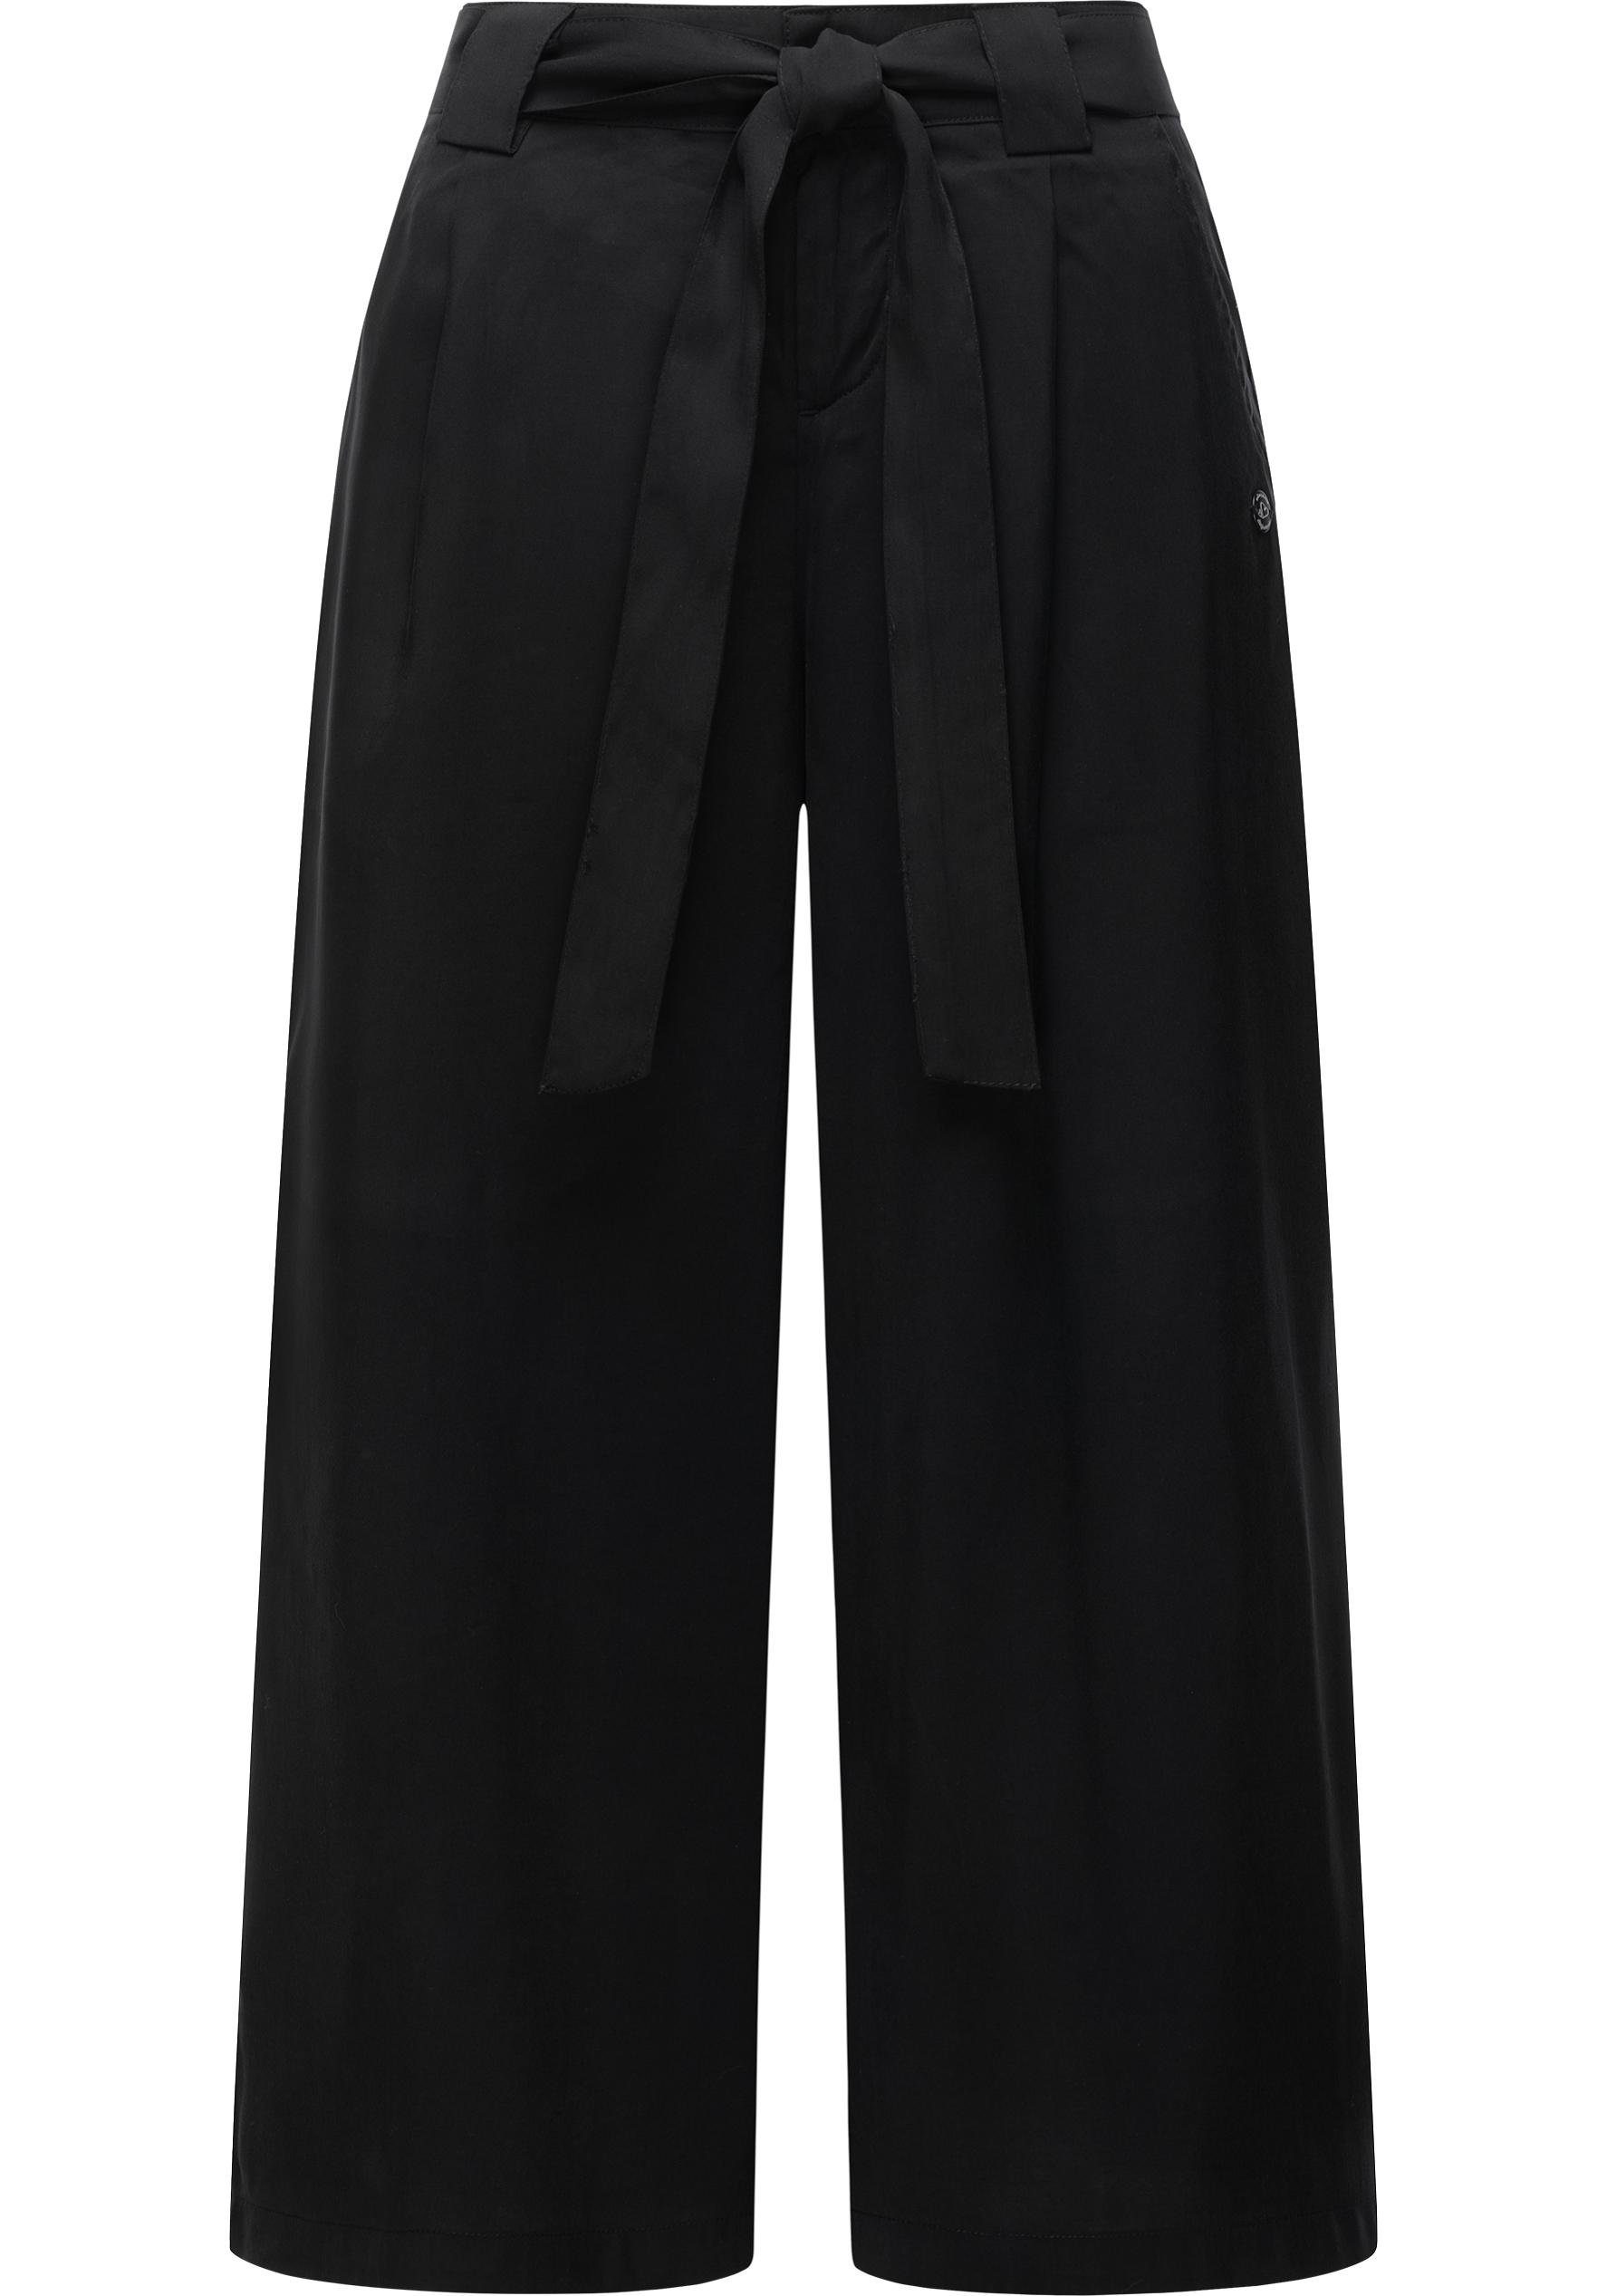 Ragwear Stoffhose Yarai Stylische Culotte Hose mit Gürtel schwarz